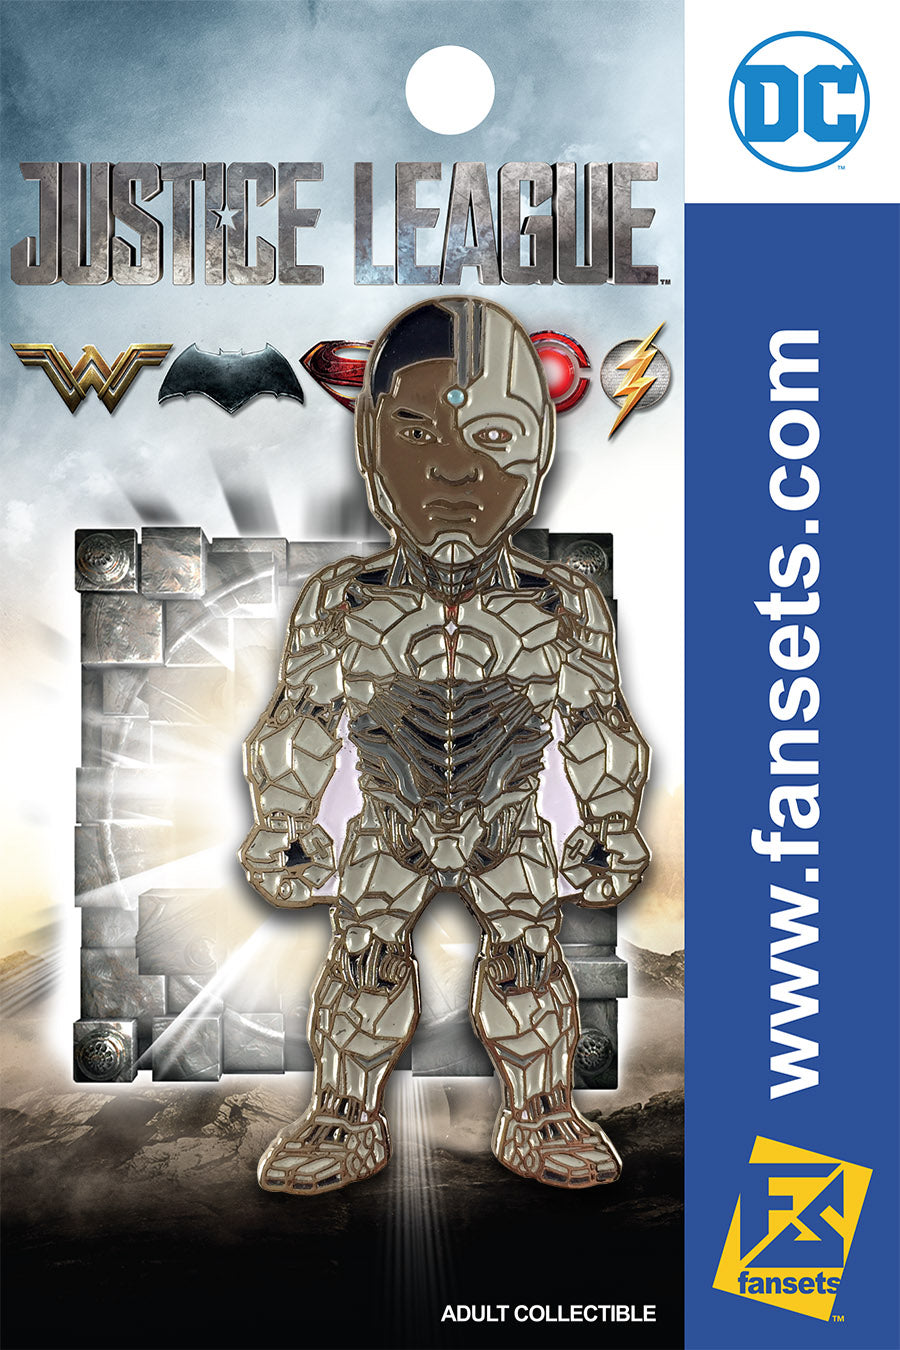 Cyborg Justice League Movie Pin FanSets DC Comics Local Comic Shop Day 2017 E1 